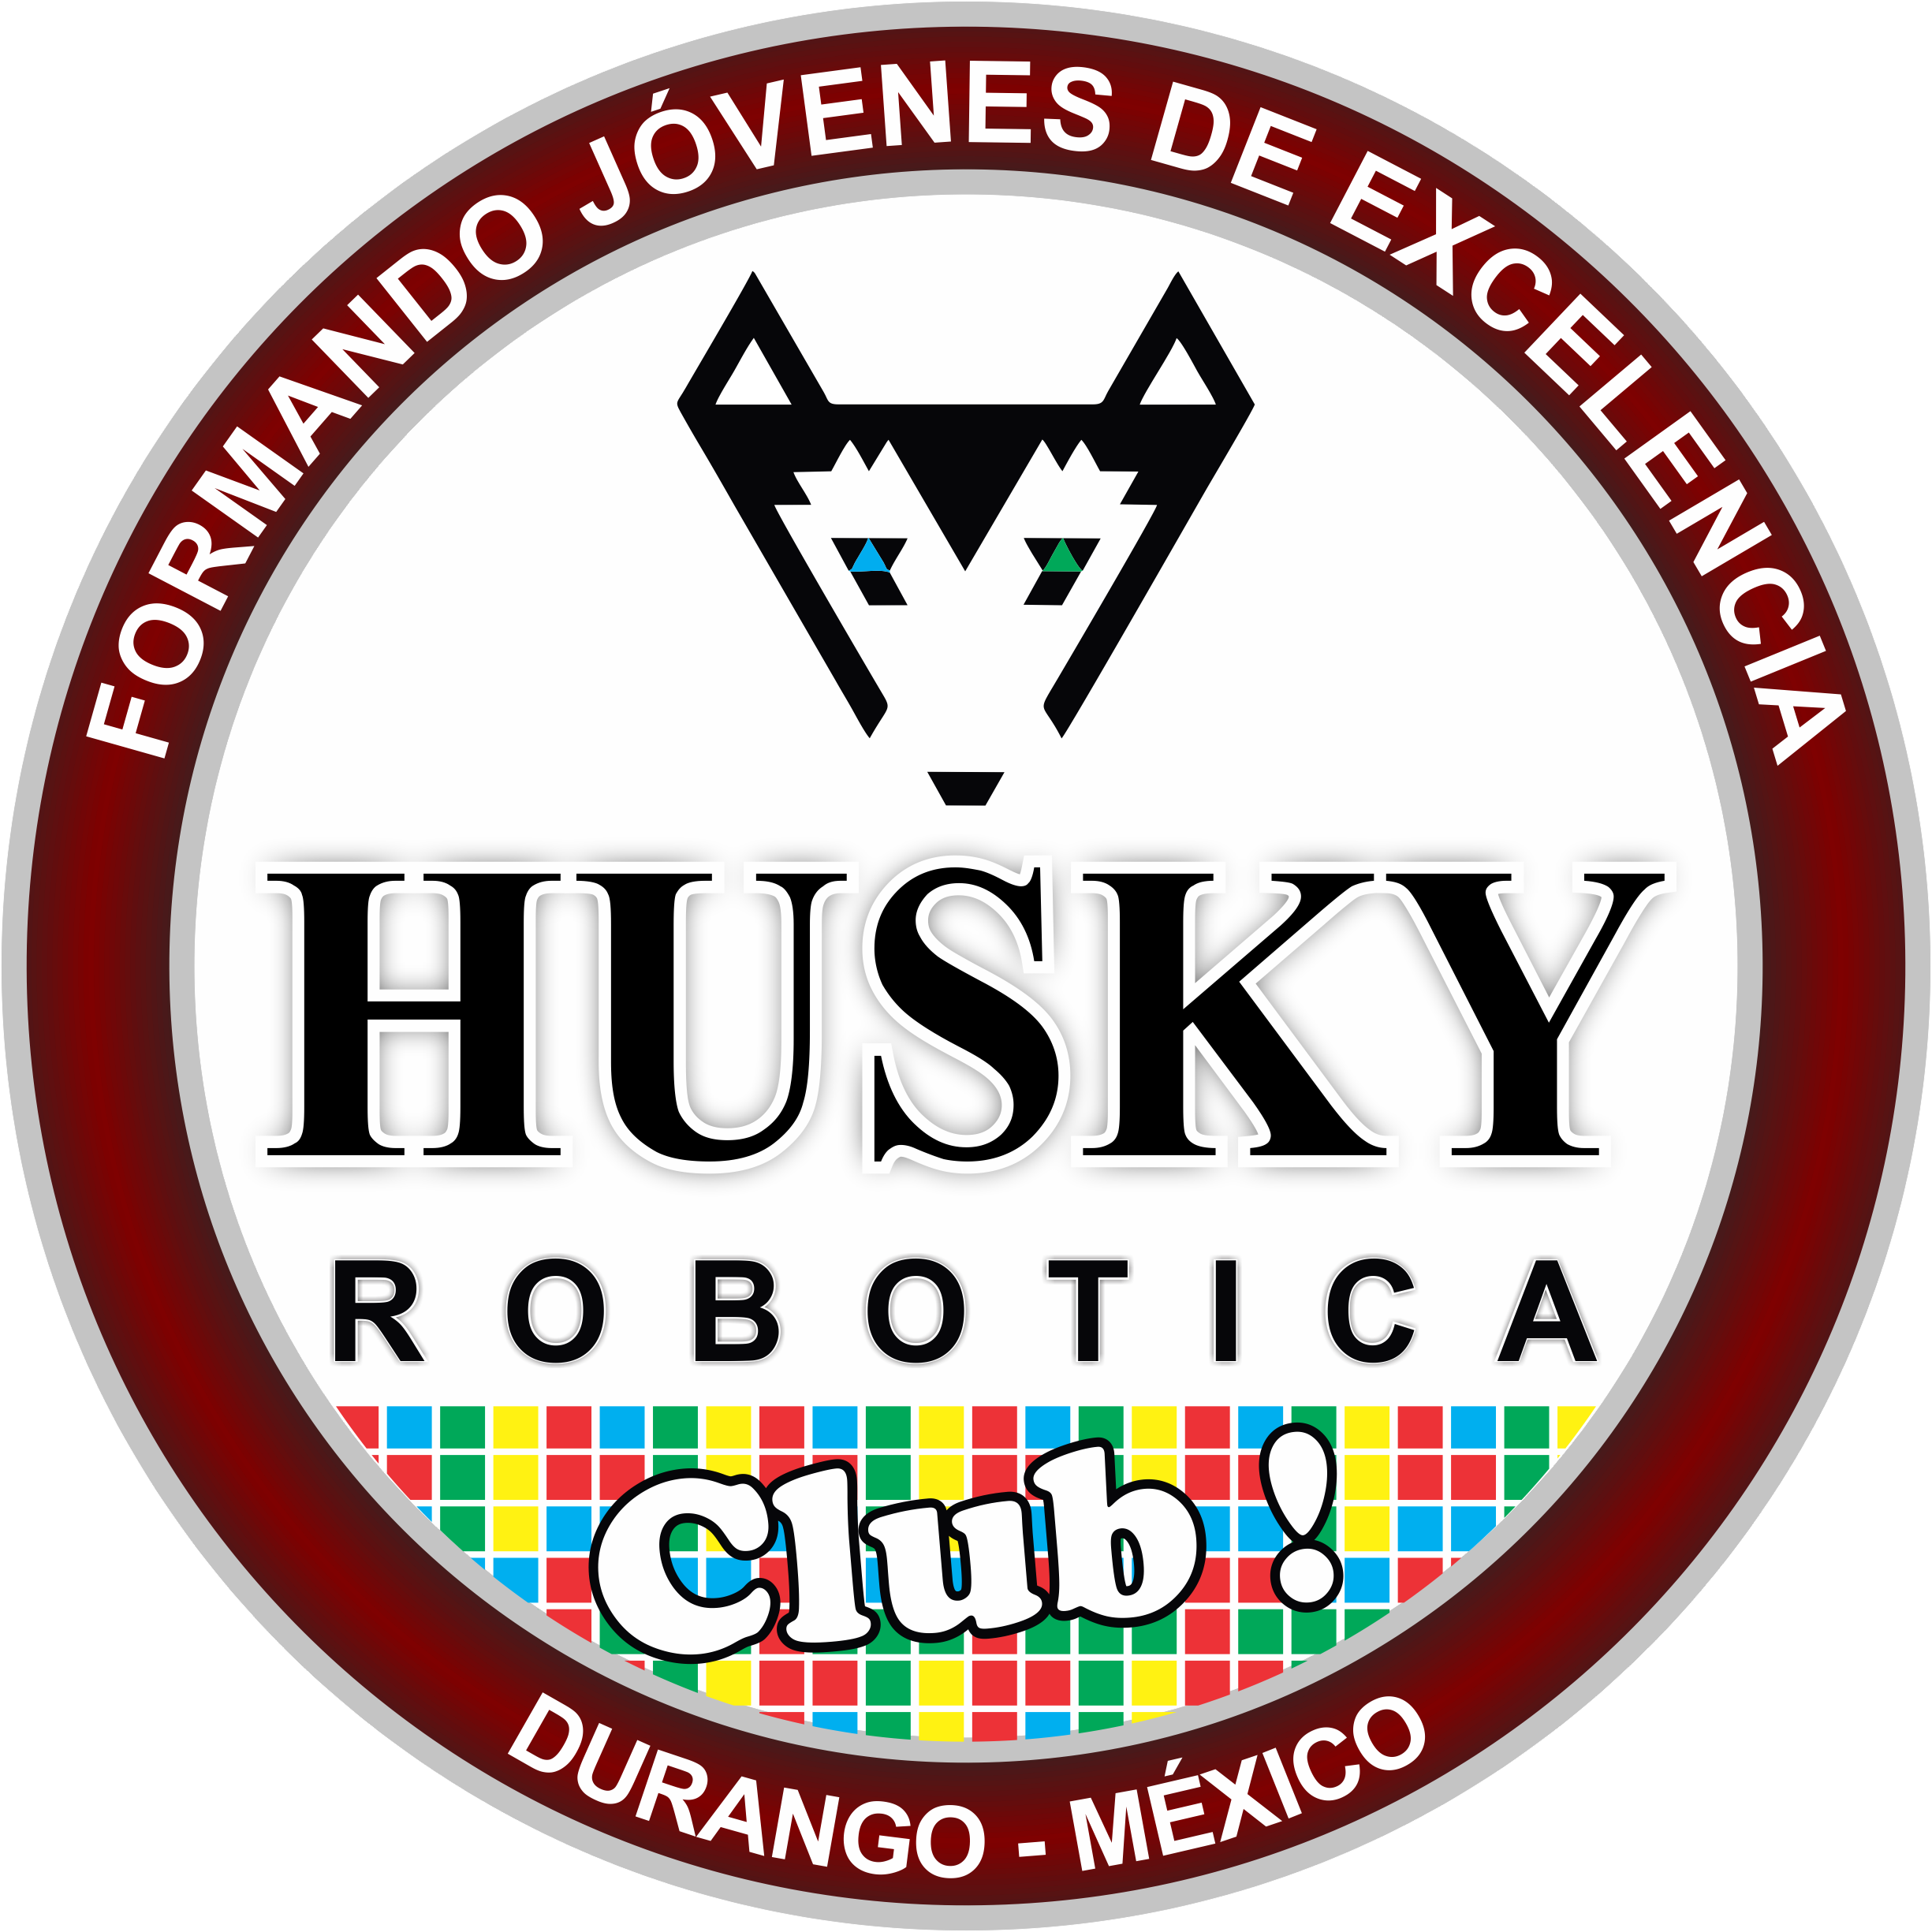 Huskyrobotics(4)